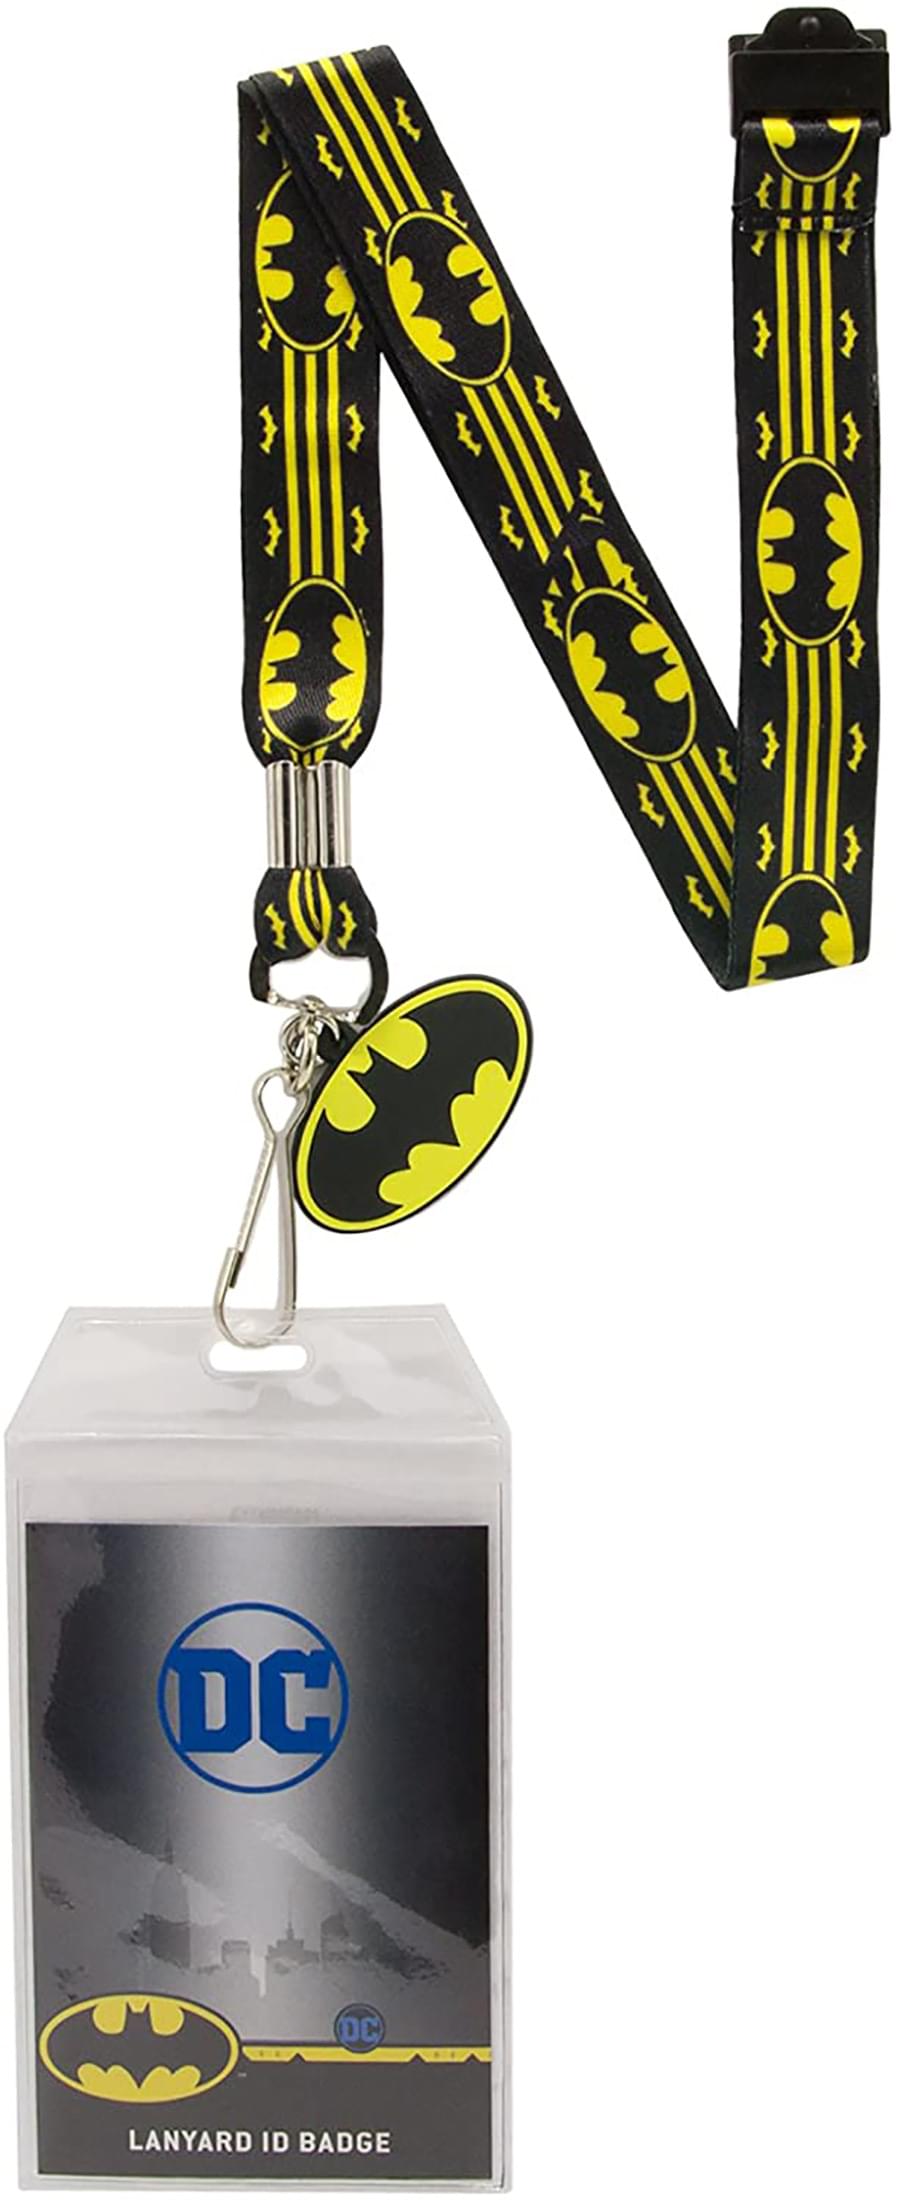 DC Batman Wrap-Around Logo Lanyard with Badge Holder and Charm